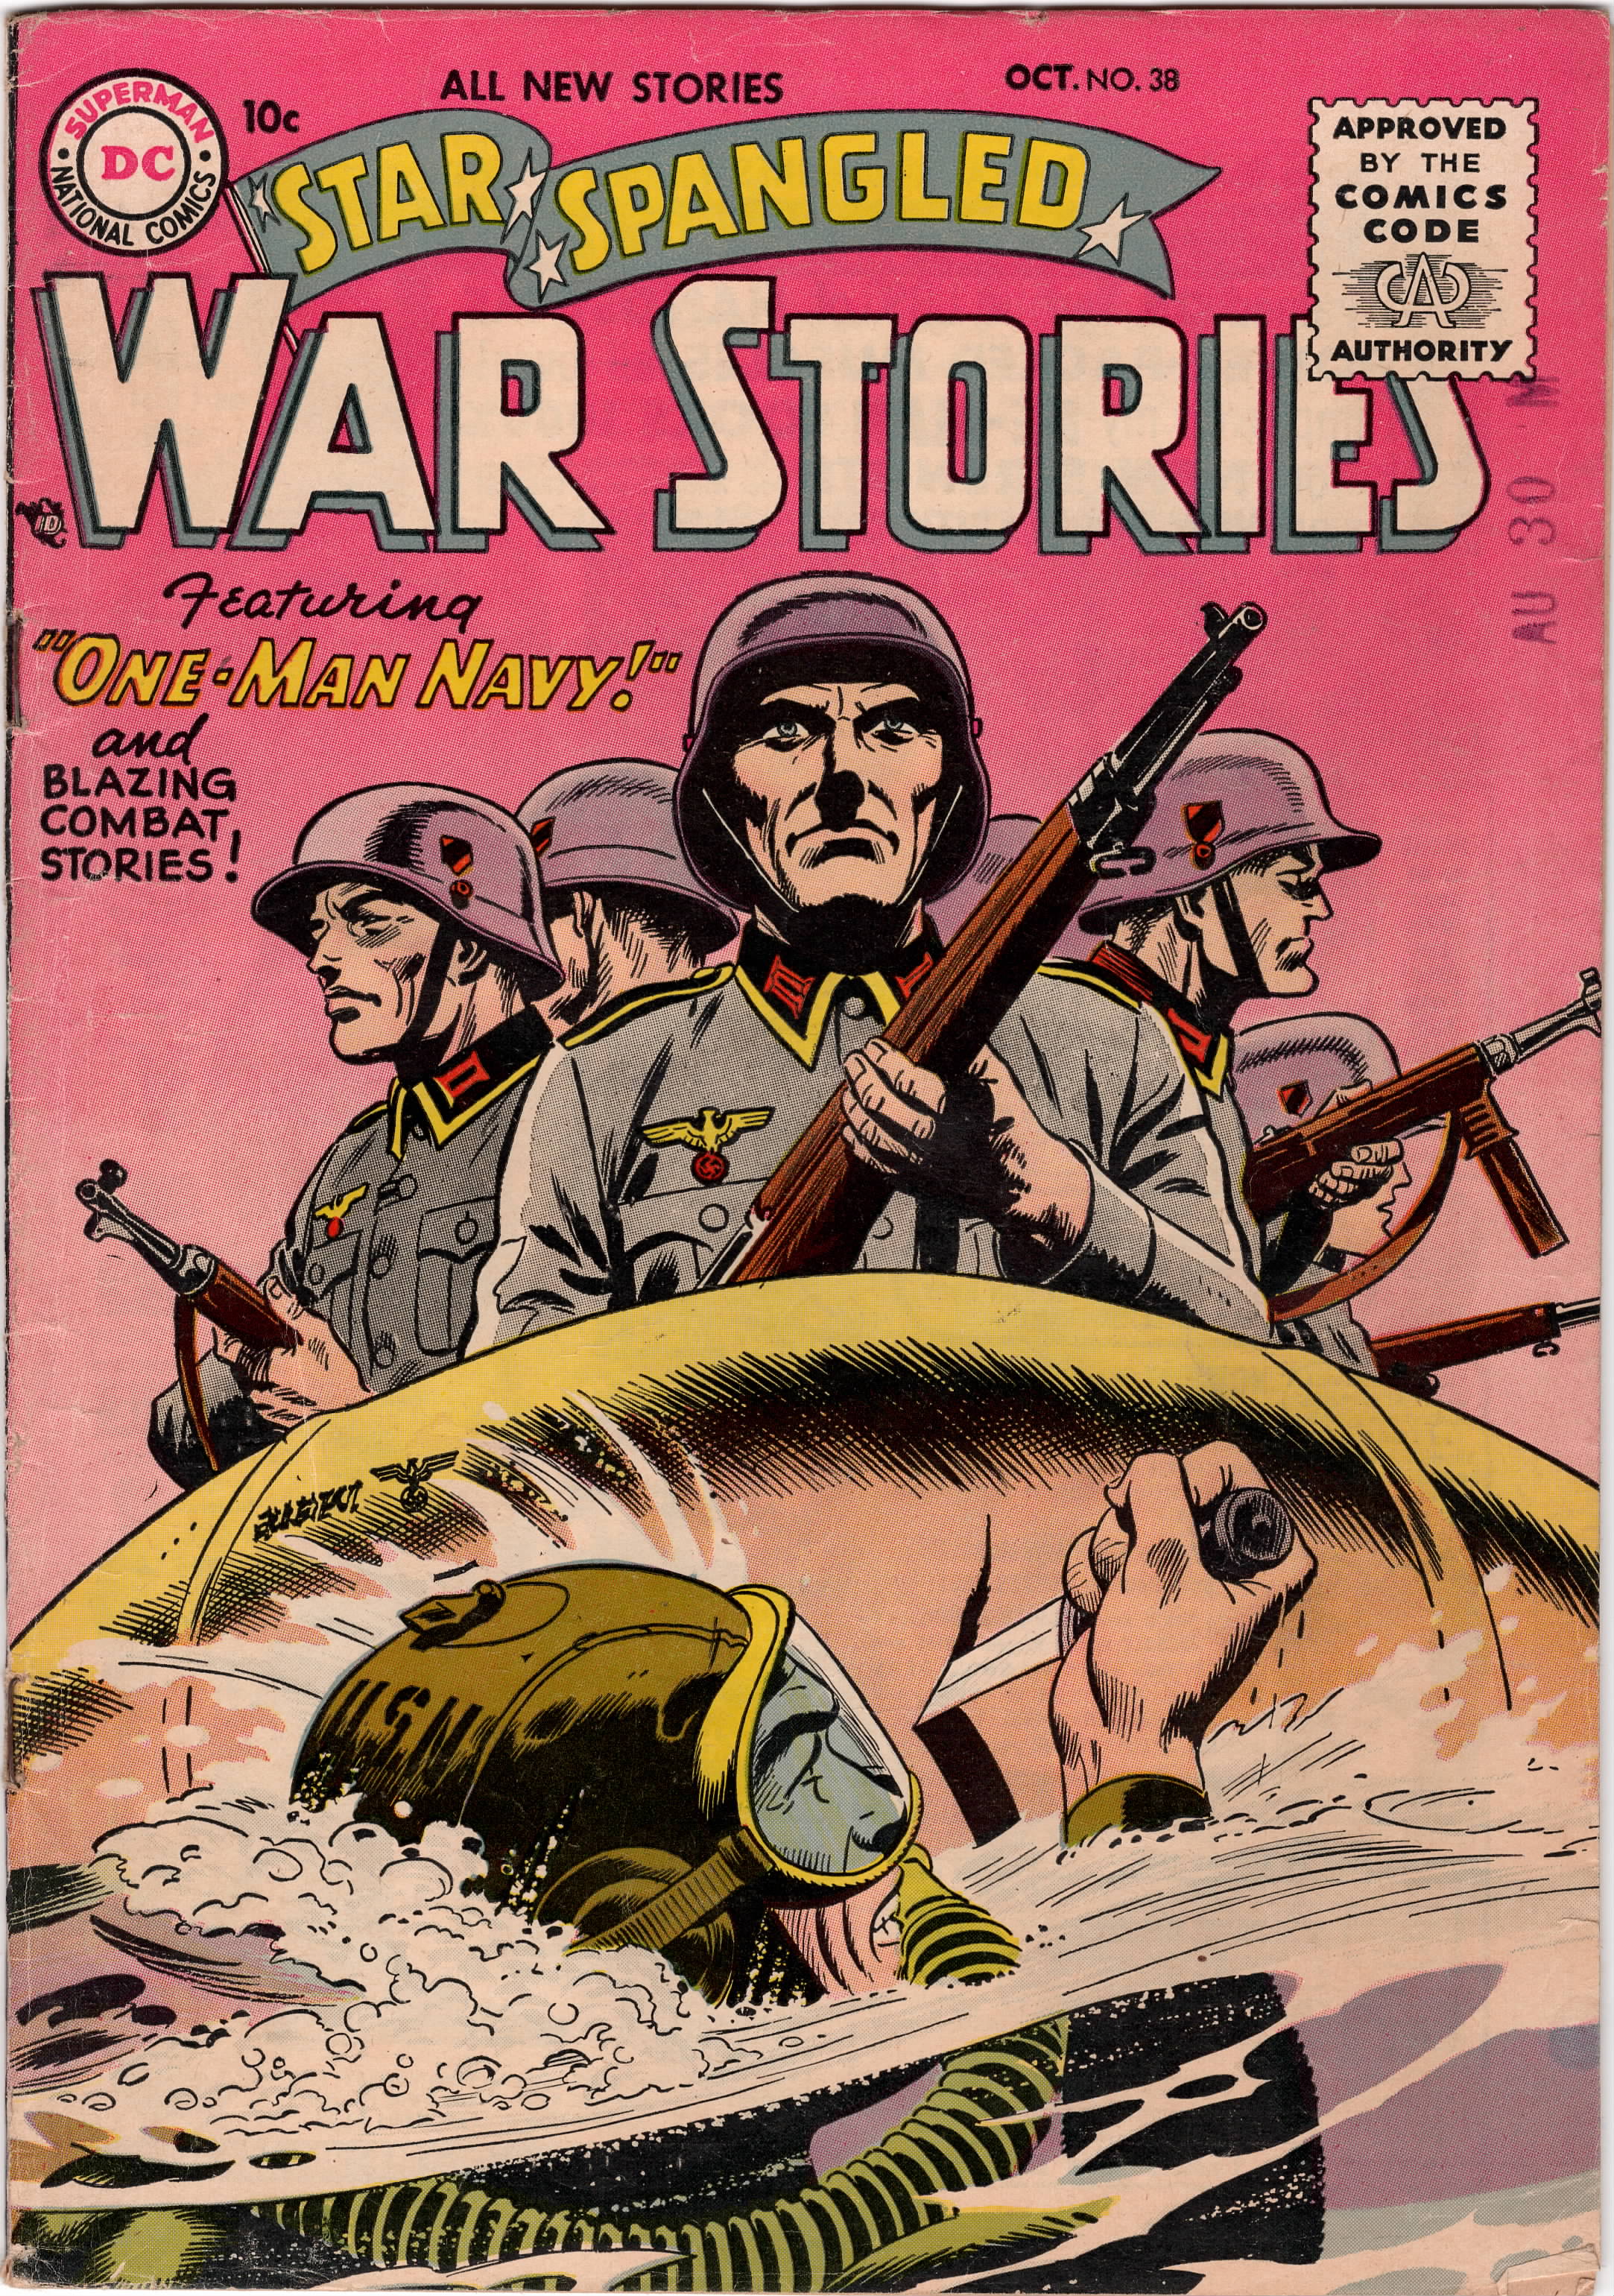 Star-Spangled War Stories #038